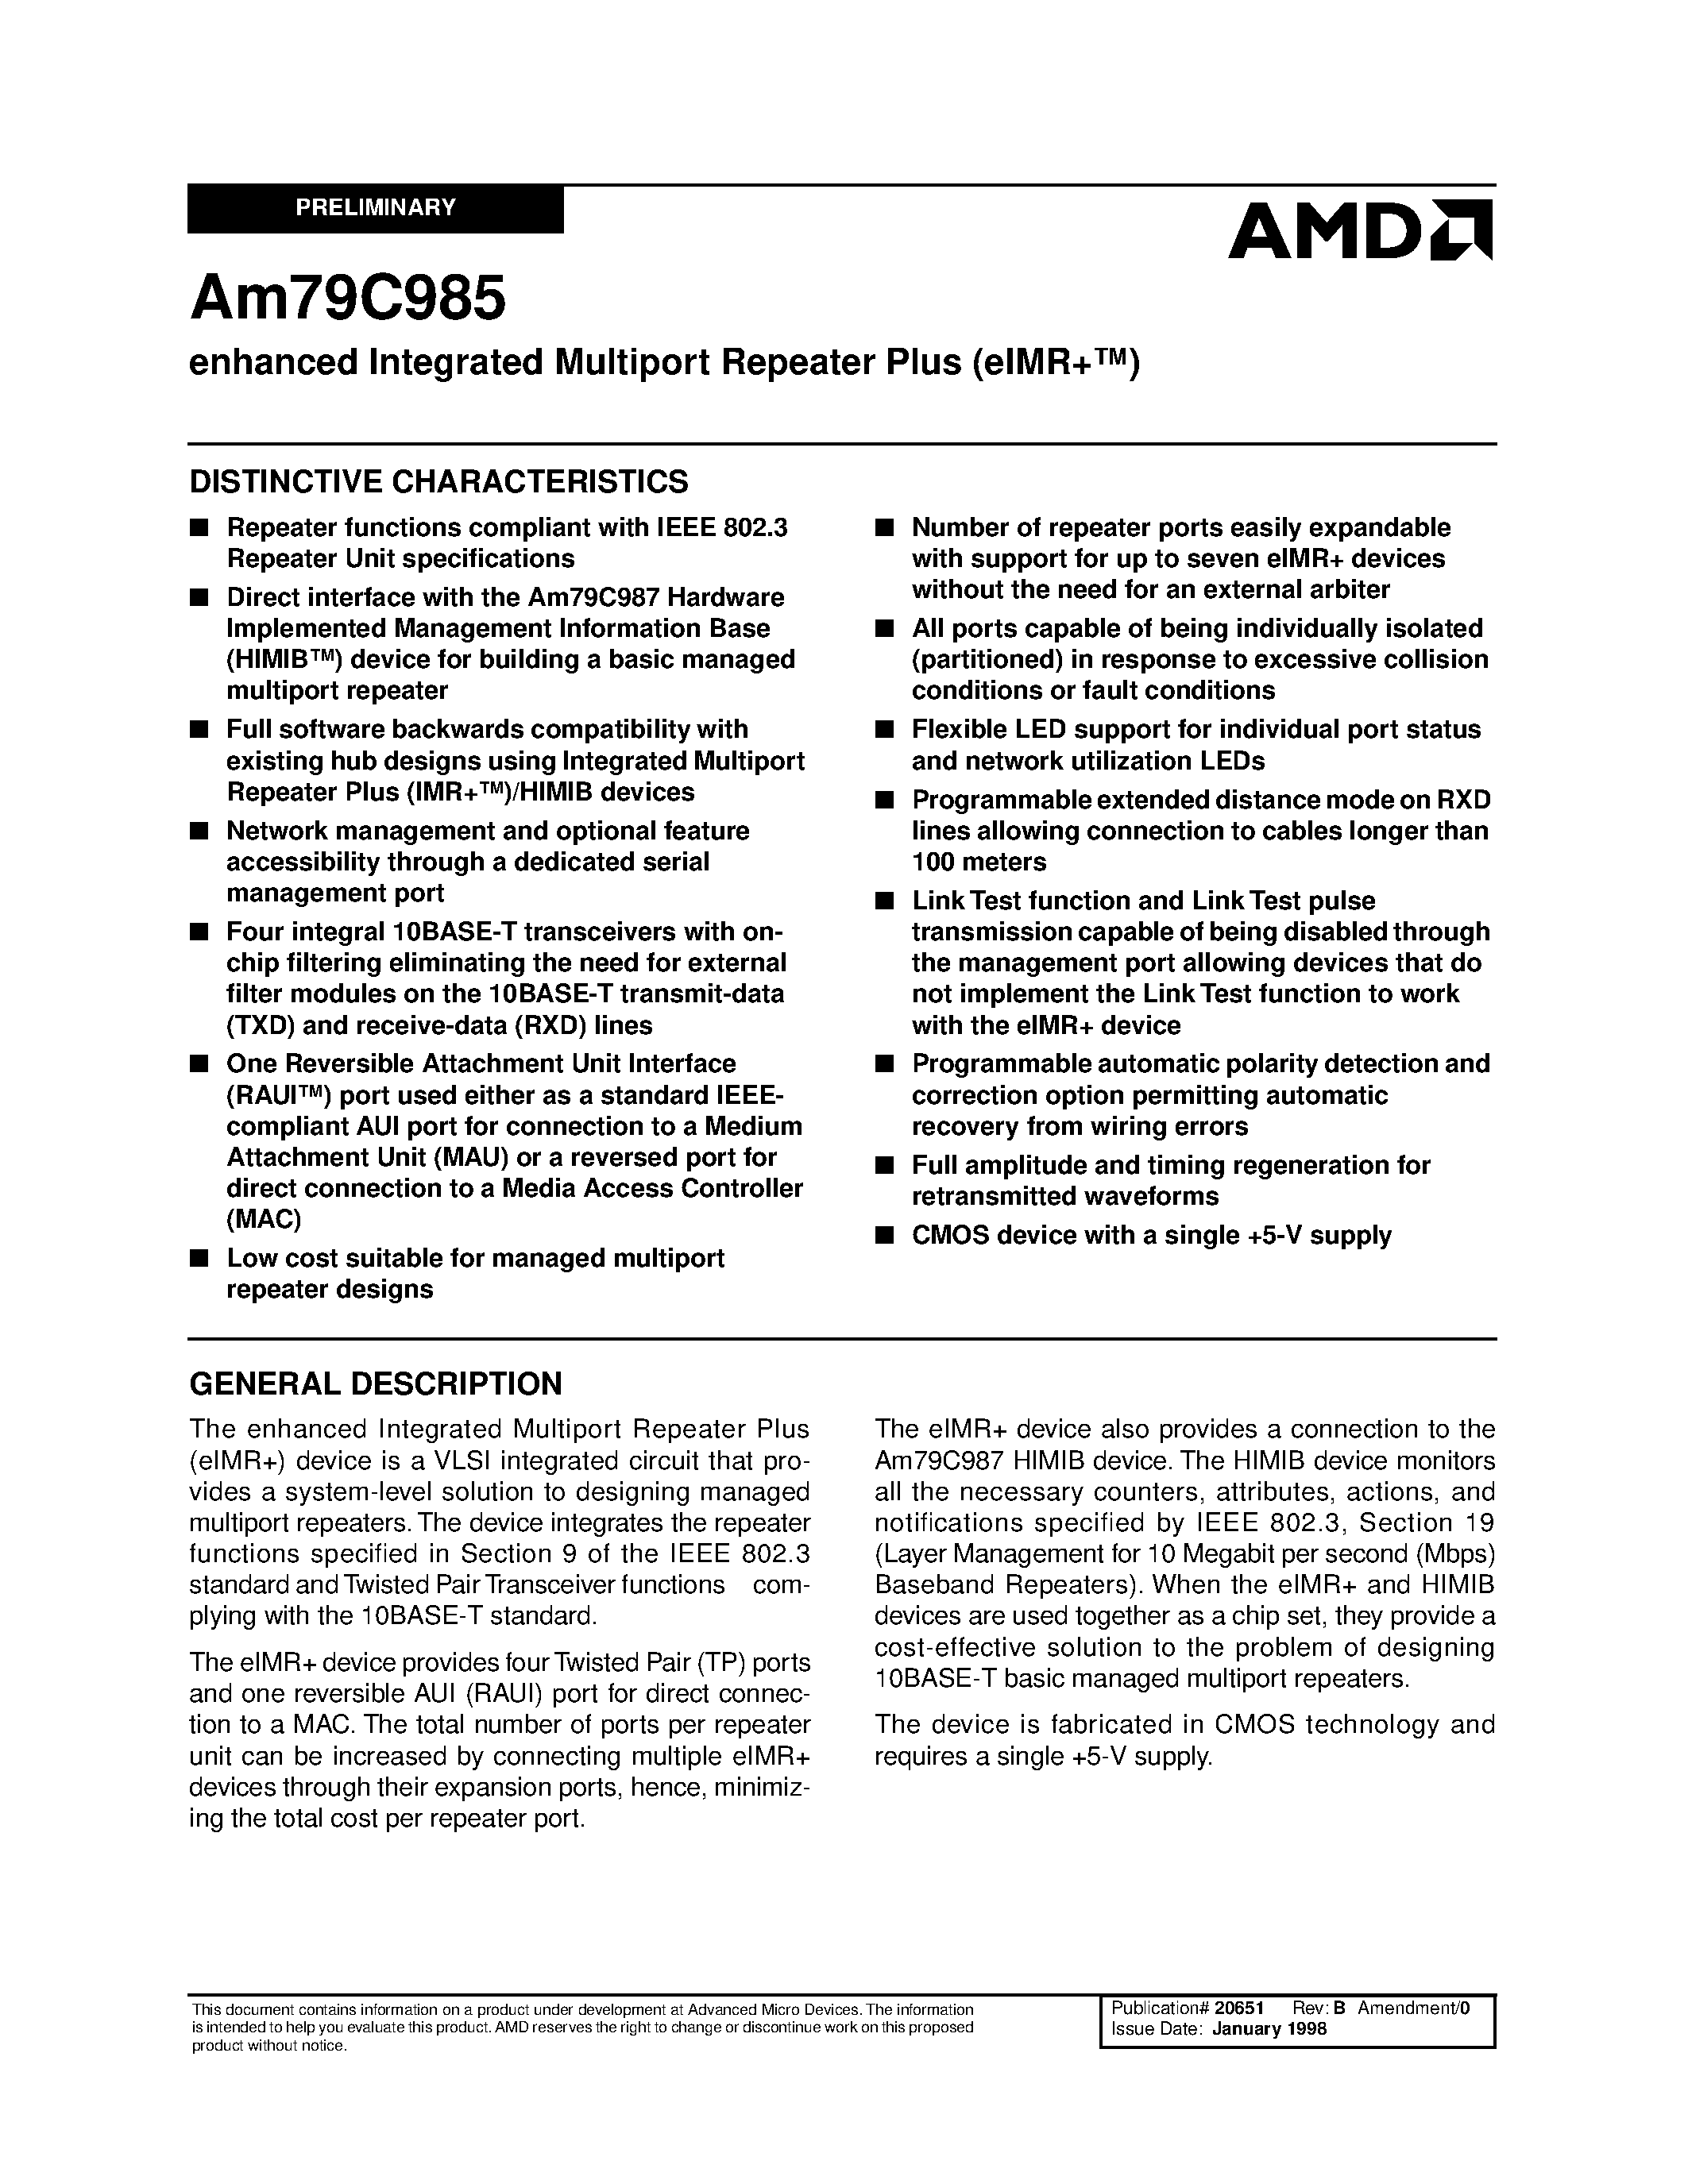 Даташит Am79C985JC - enhanced Integrated Multiport Repeater Plus (eIMR+) страница 1